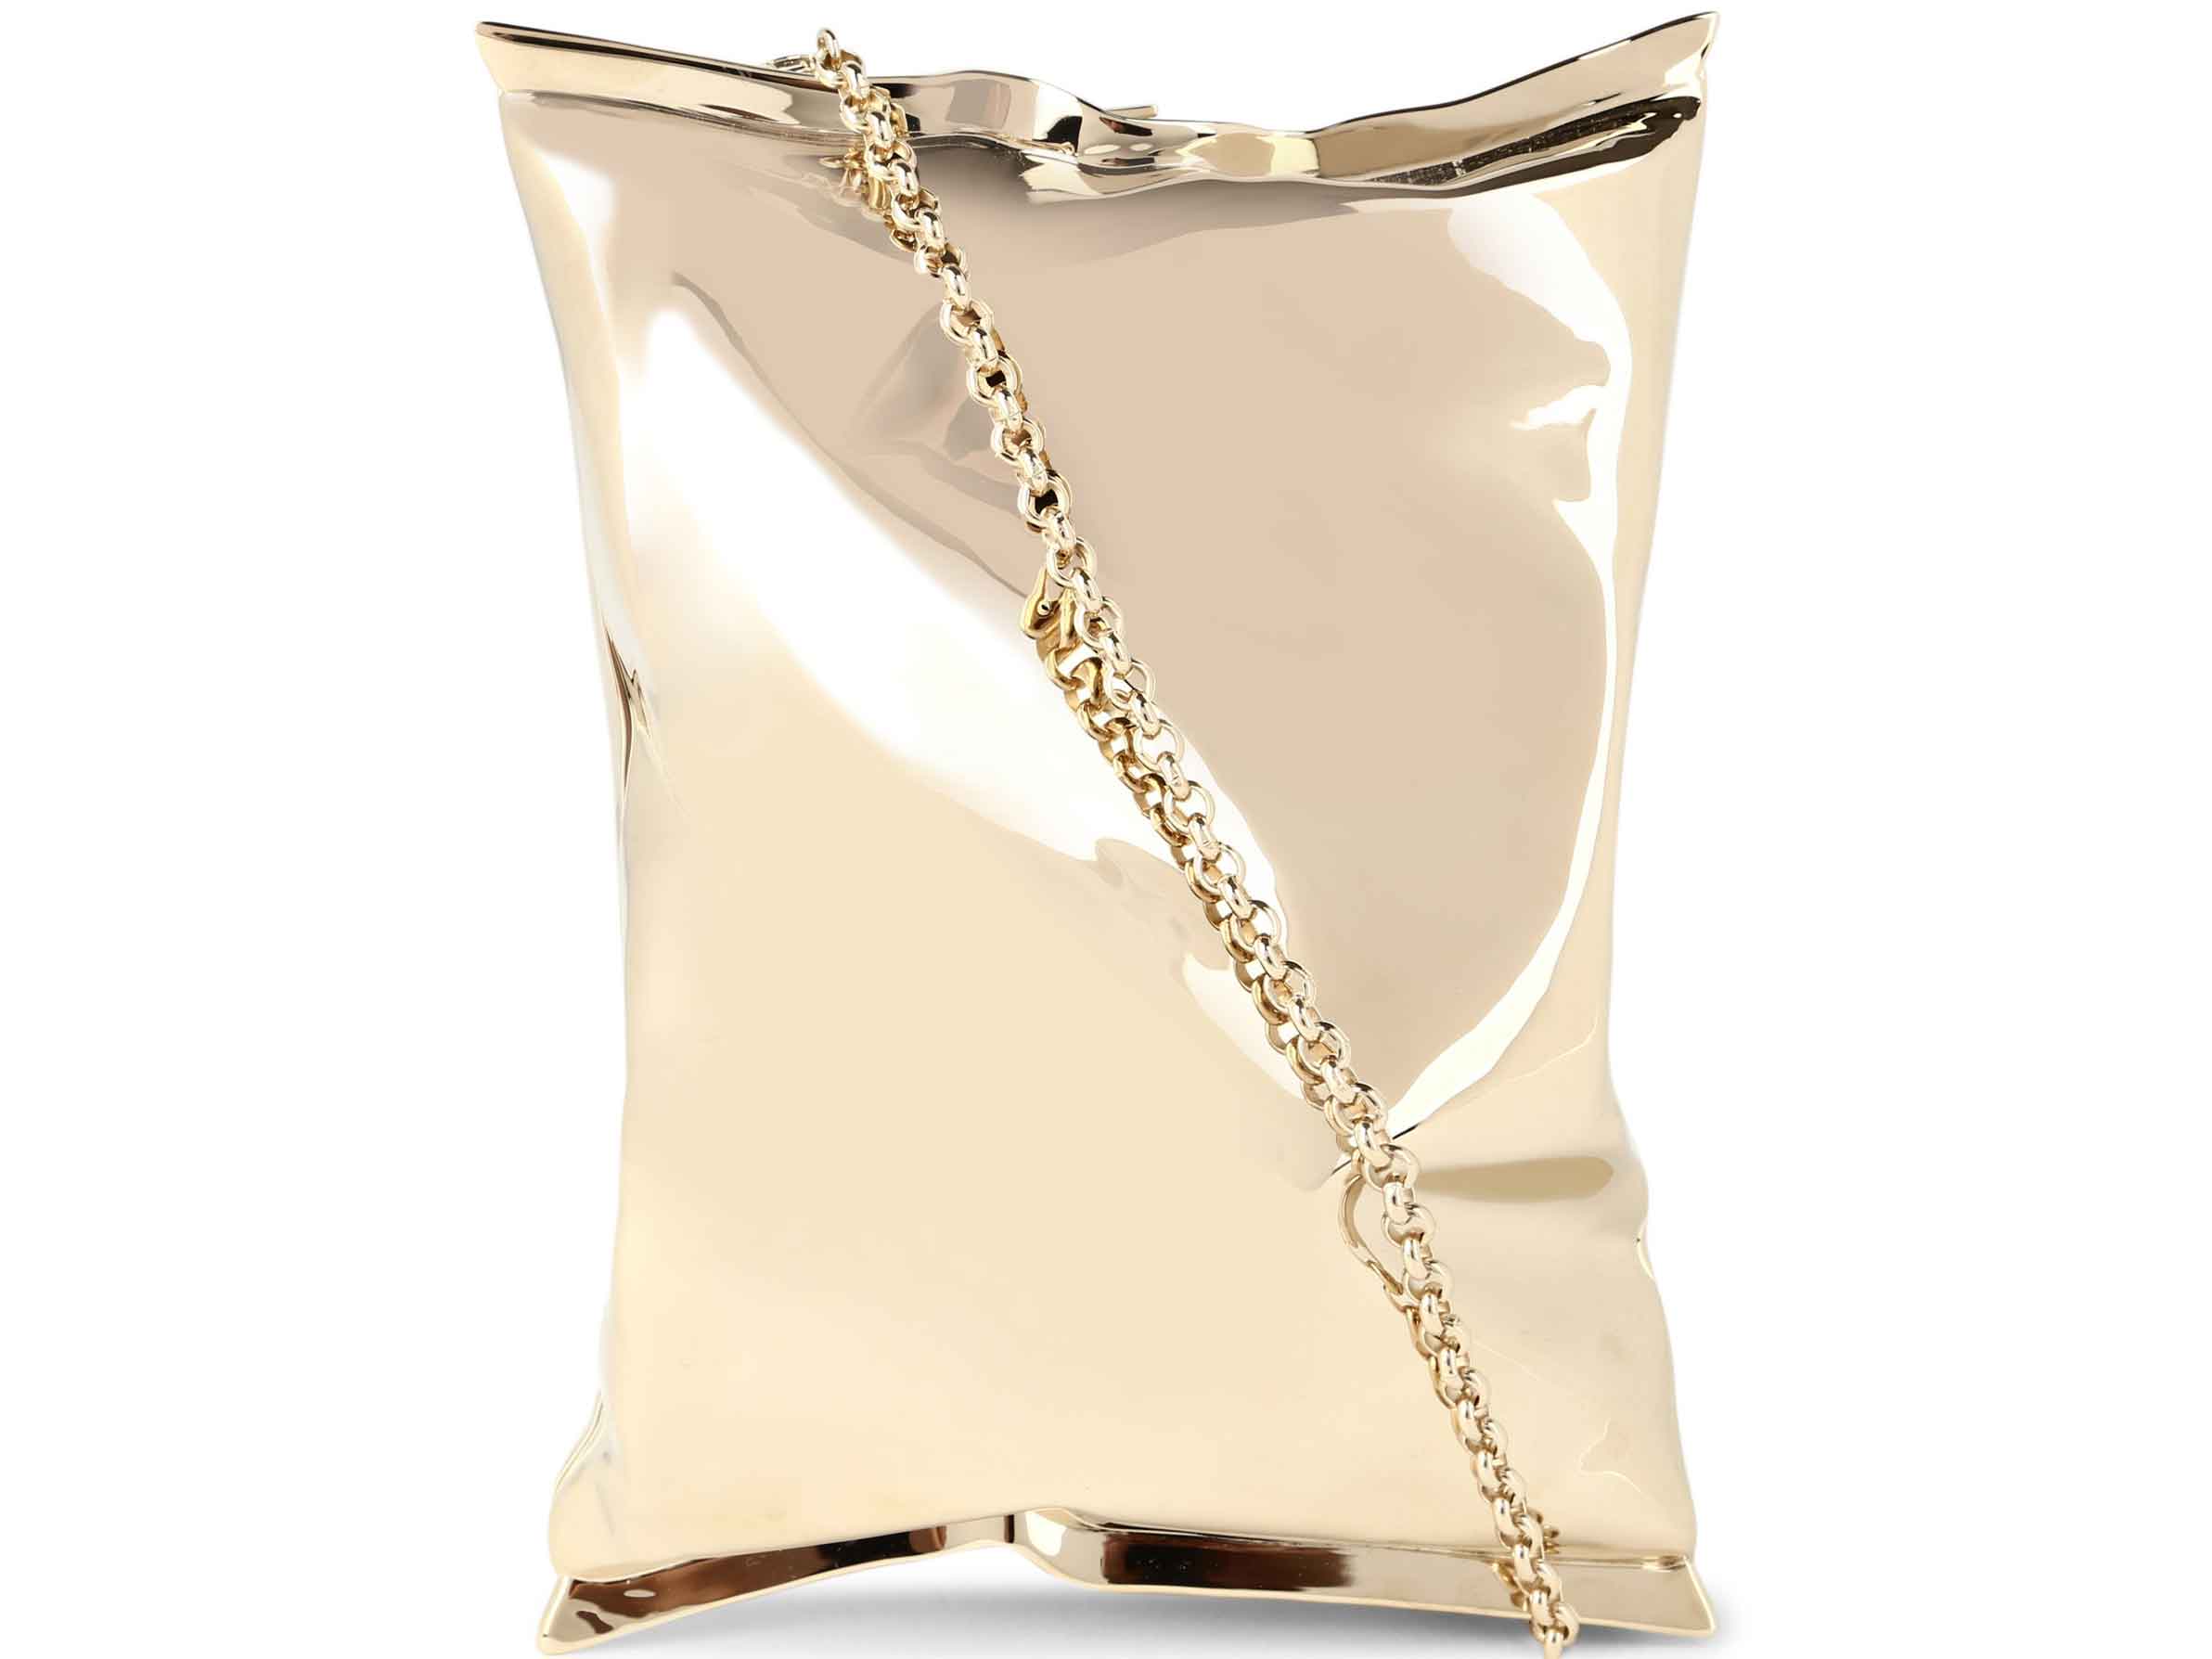 Anya Hindmarch crisp packet bag in 18 carat solid gold